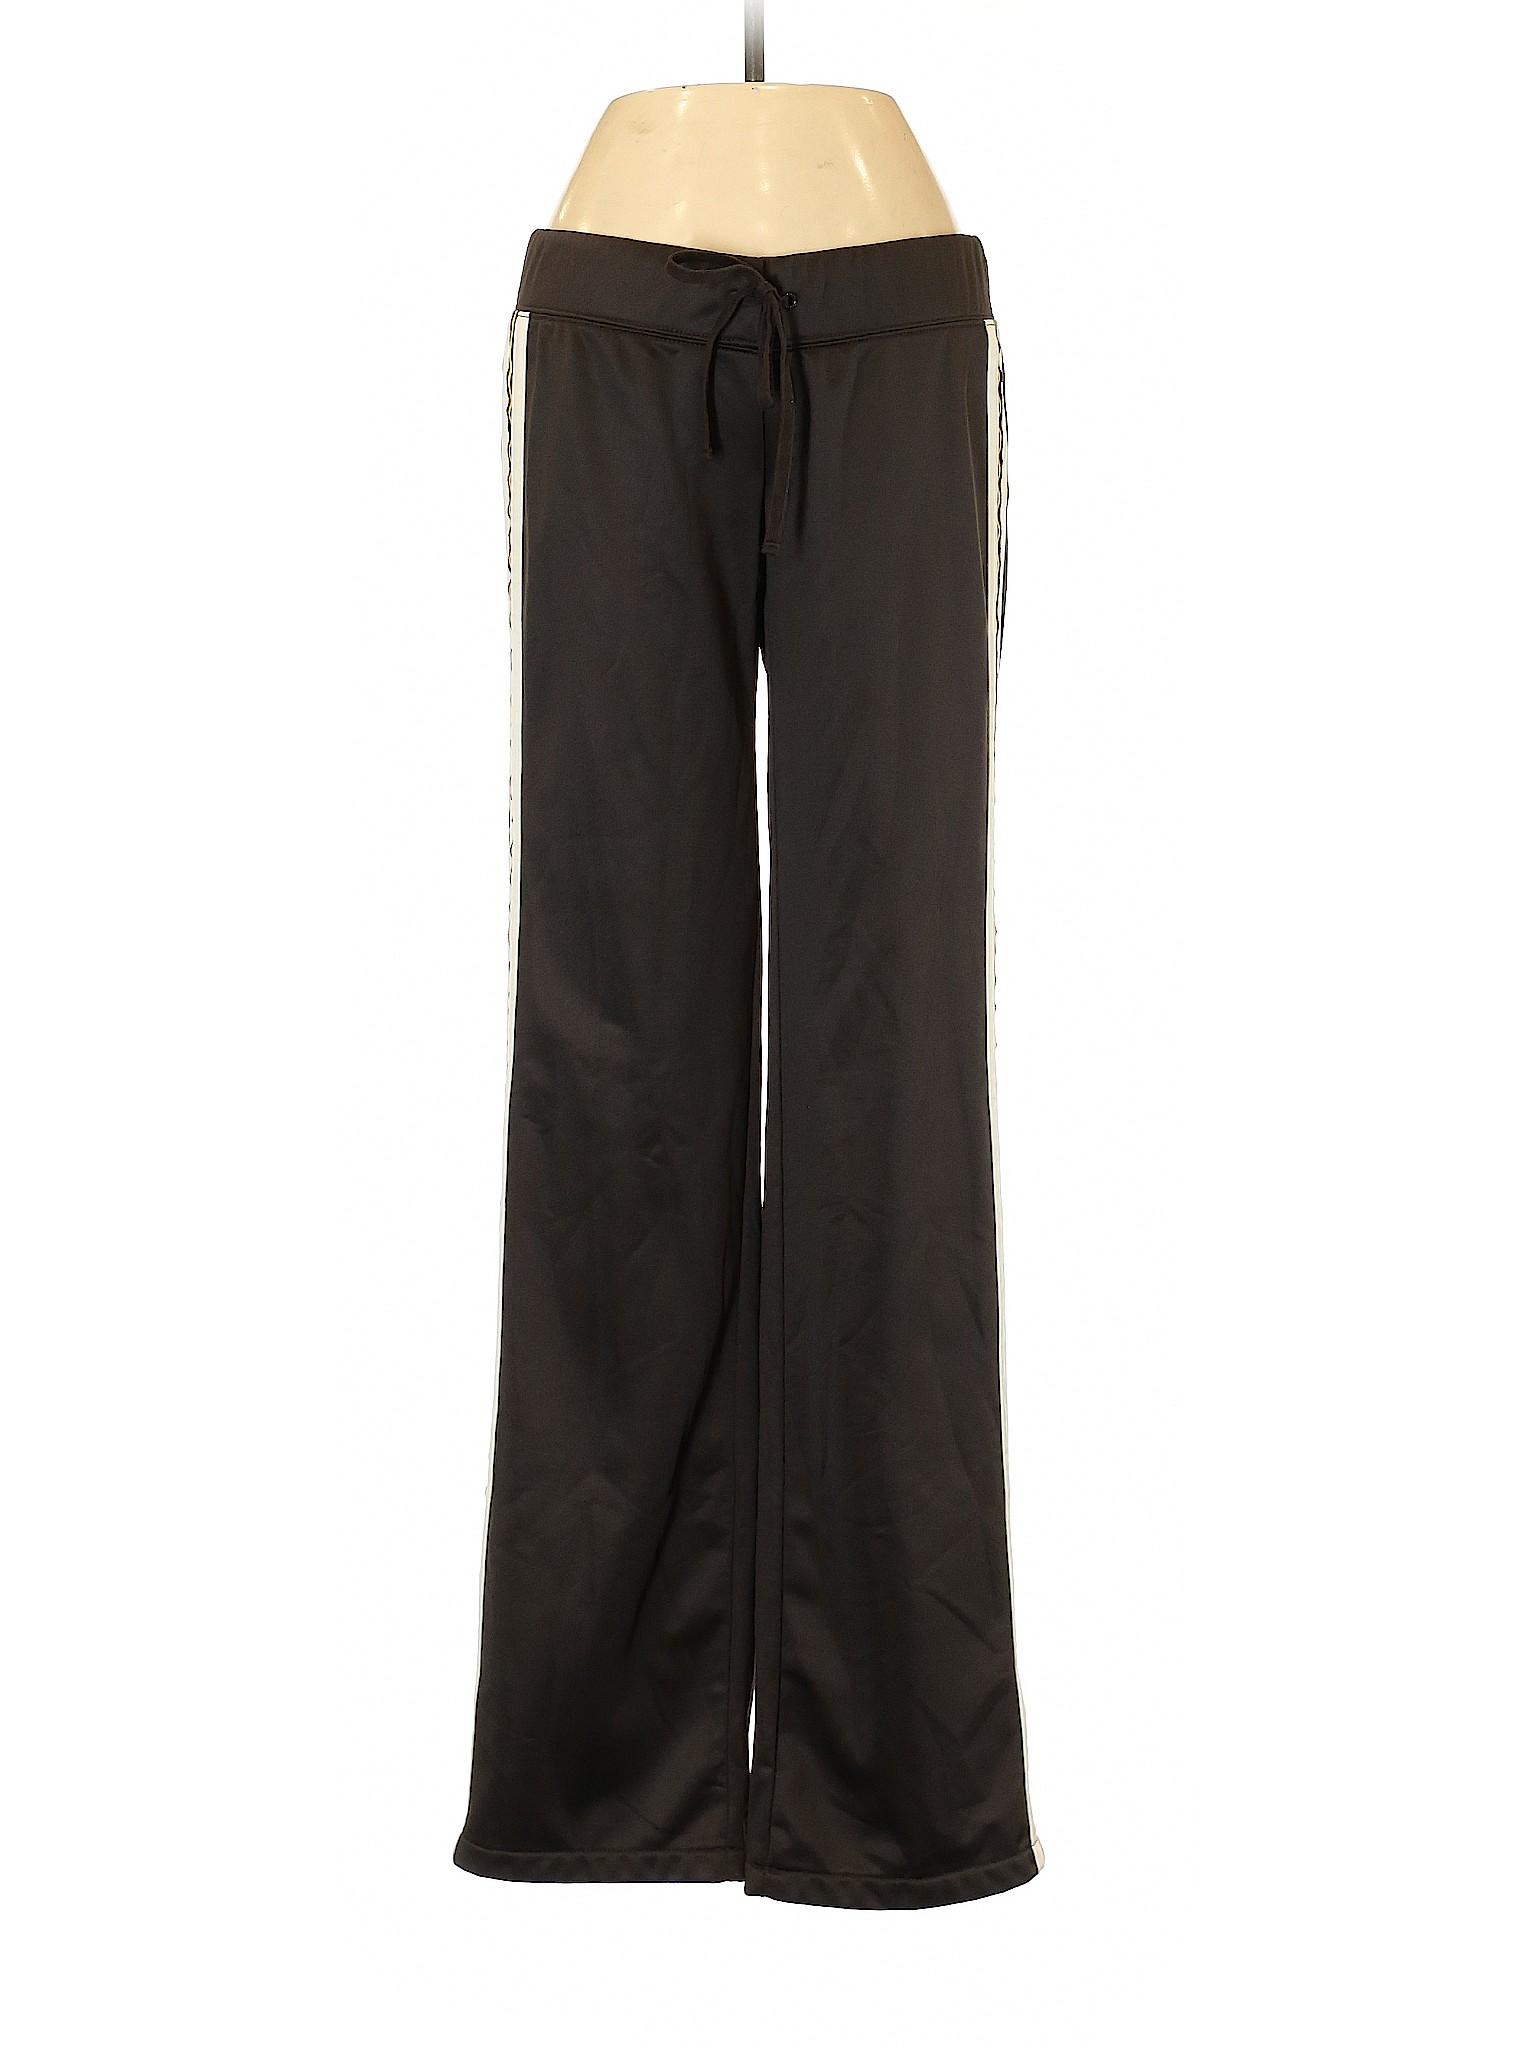 Juicy Couture Women Black Track Pants P | eBay